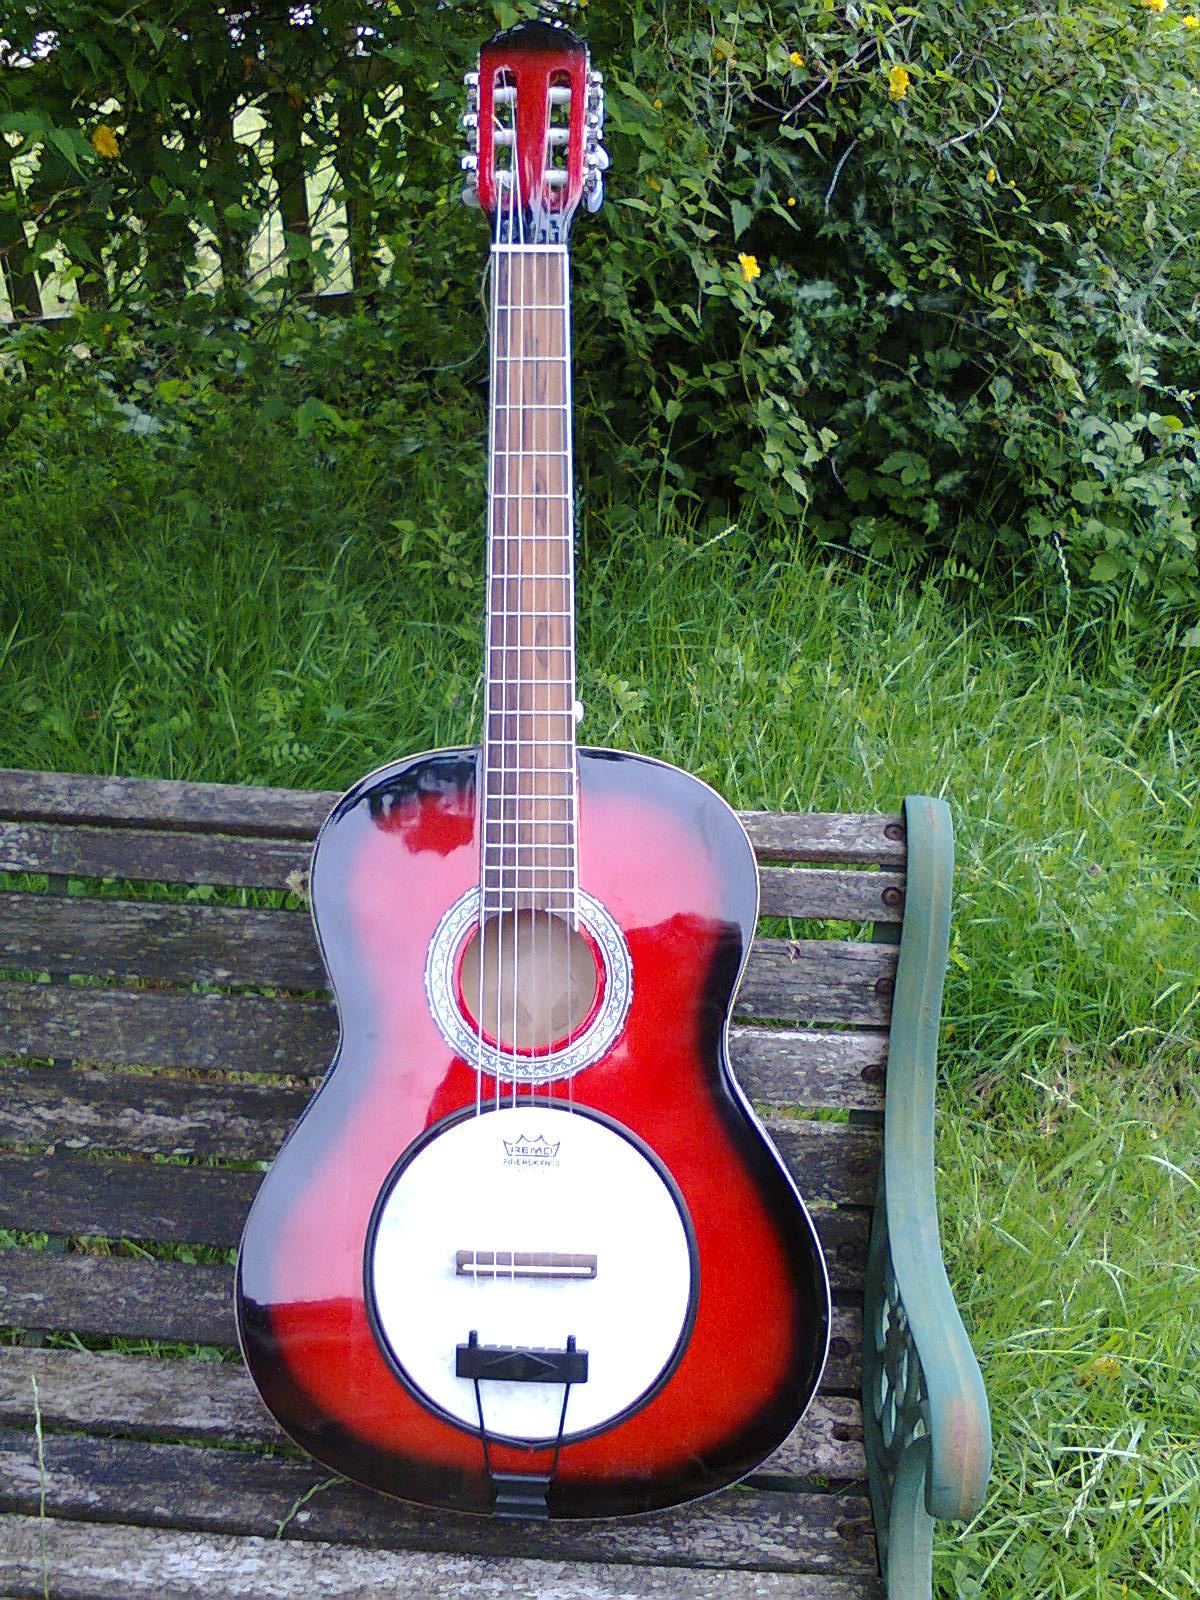 The Tarjo - Cheap Guitar Turned Into Guitar-Banjo.